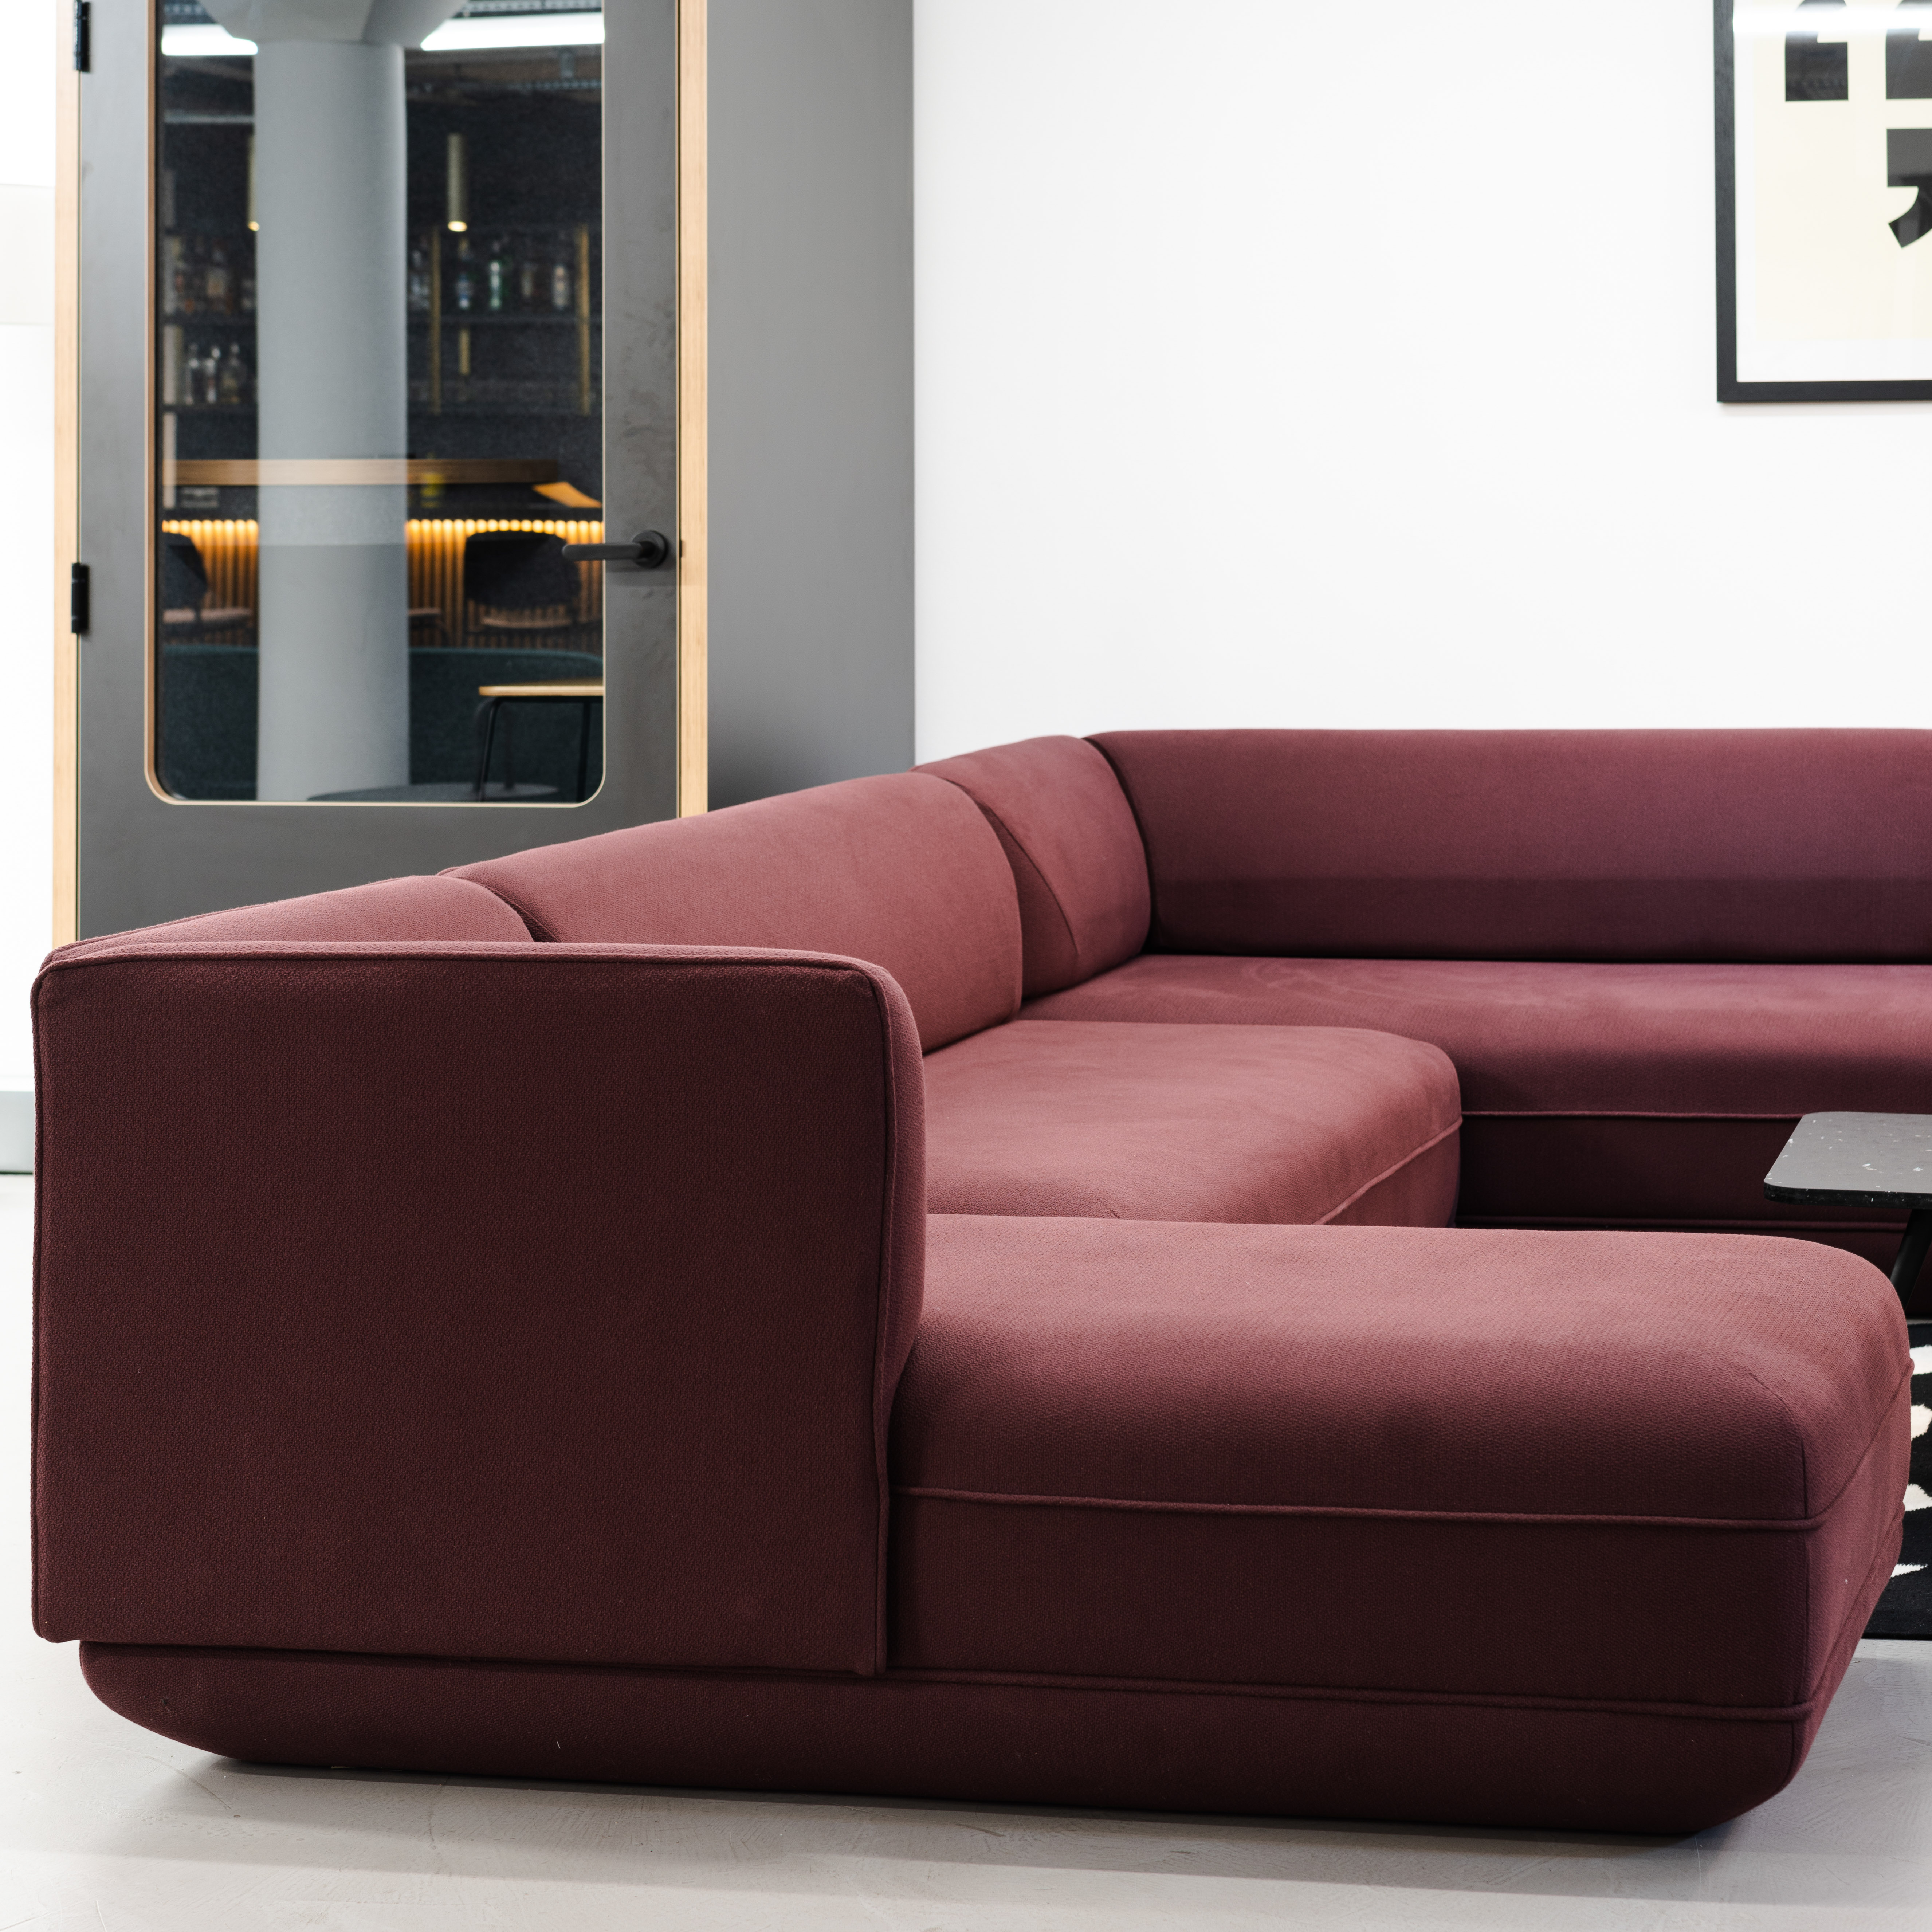 WS - Showroom - Islands sofa - Red - Details (4)